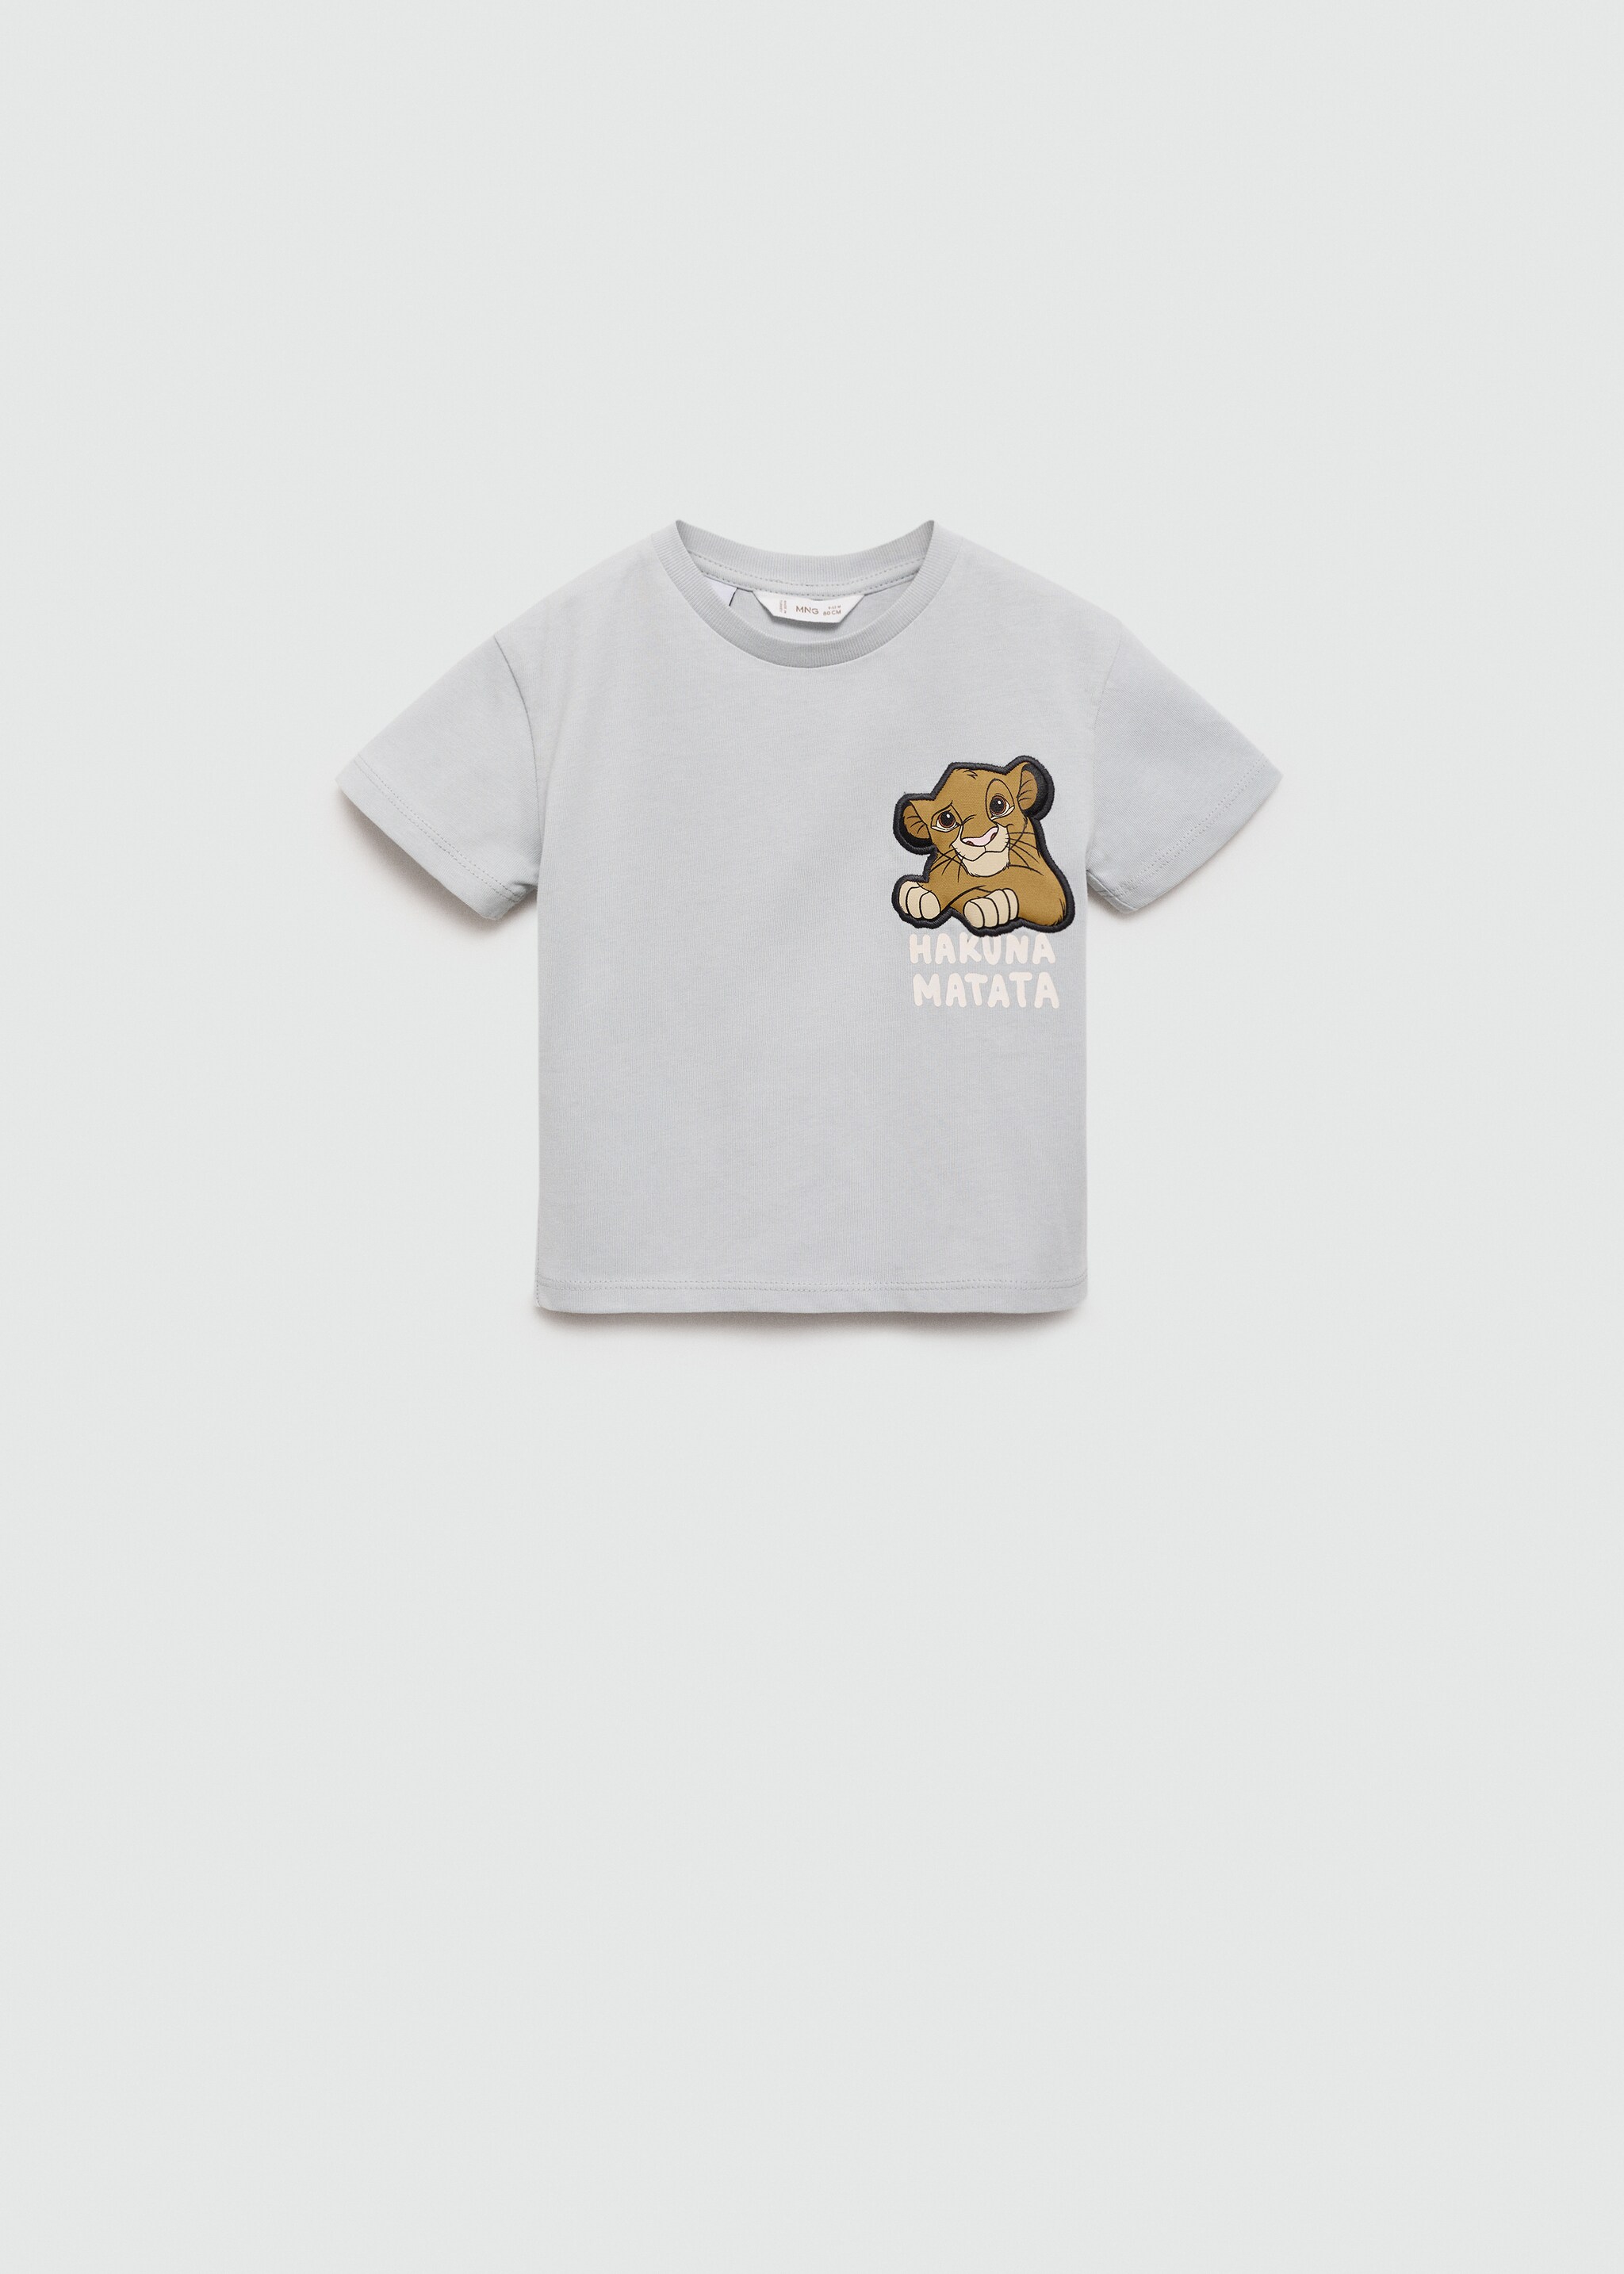 The Lion King t-shirt - Товар без моделі